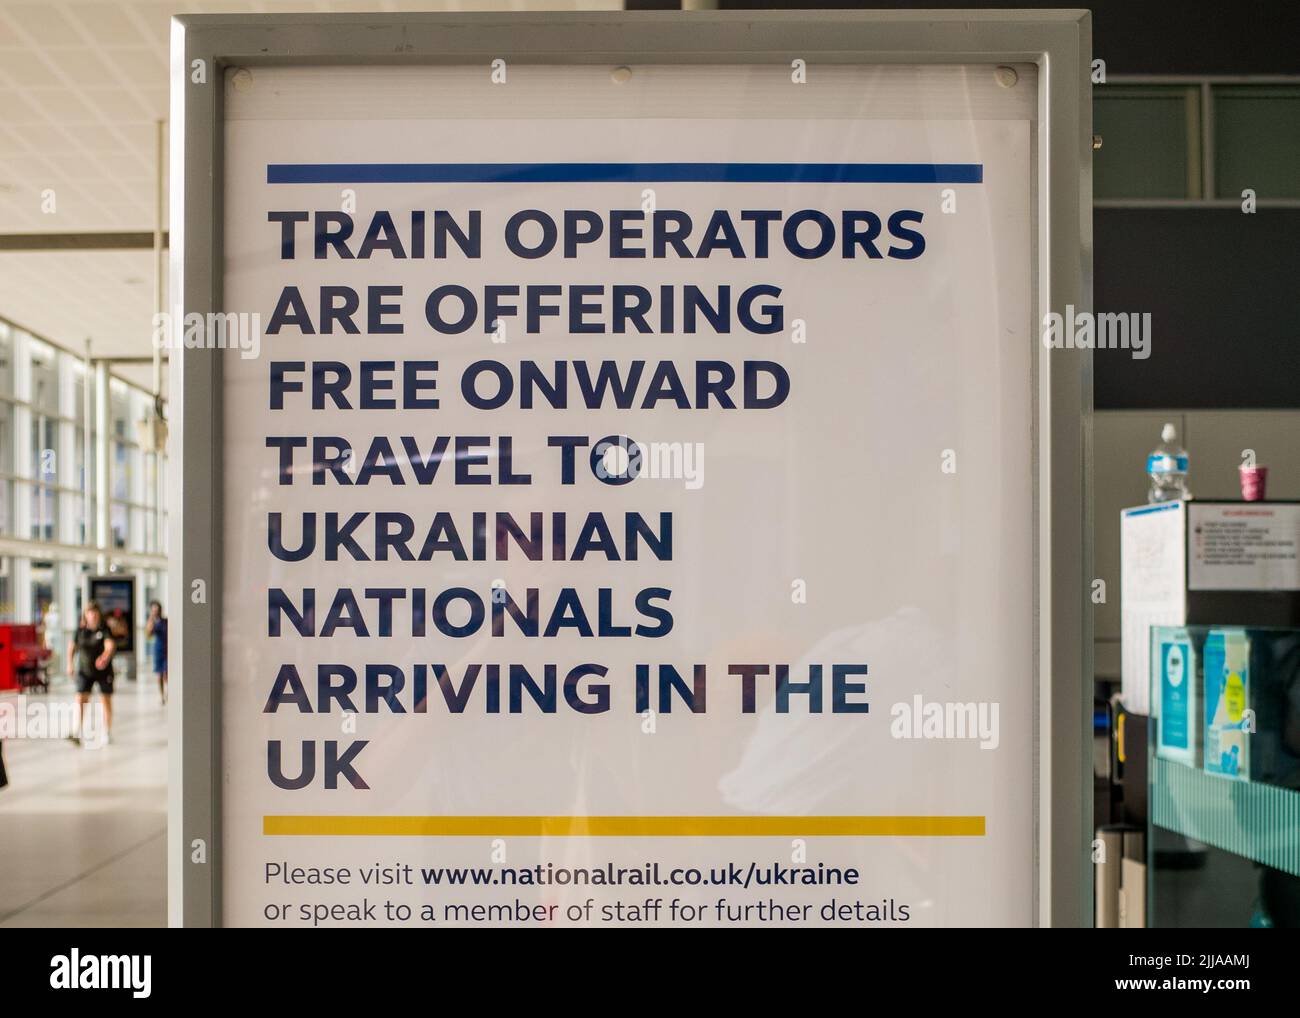 Free Onward Travel to Ukrainian International arriving in the UK - Sign at Stratford International train station, London, England, UK. Stock Photo